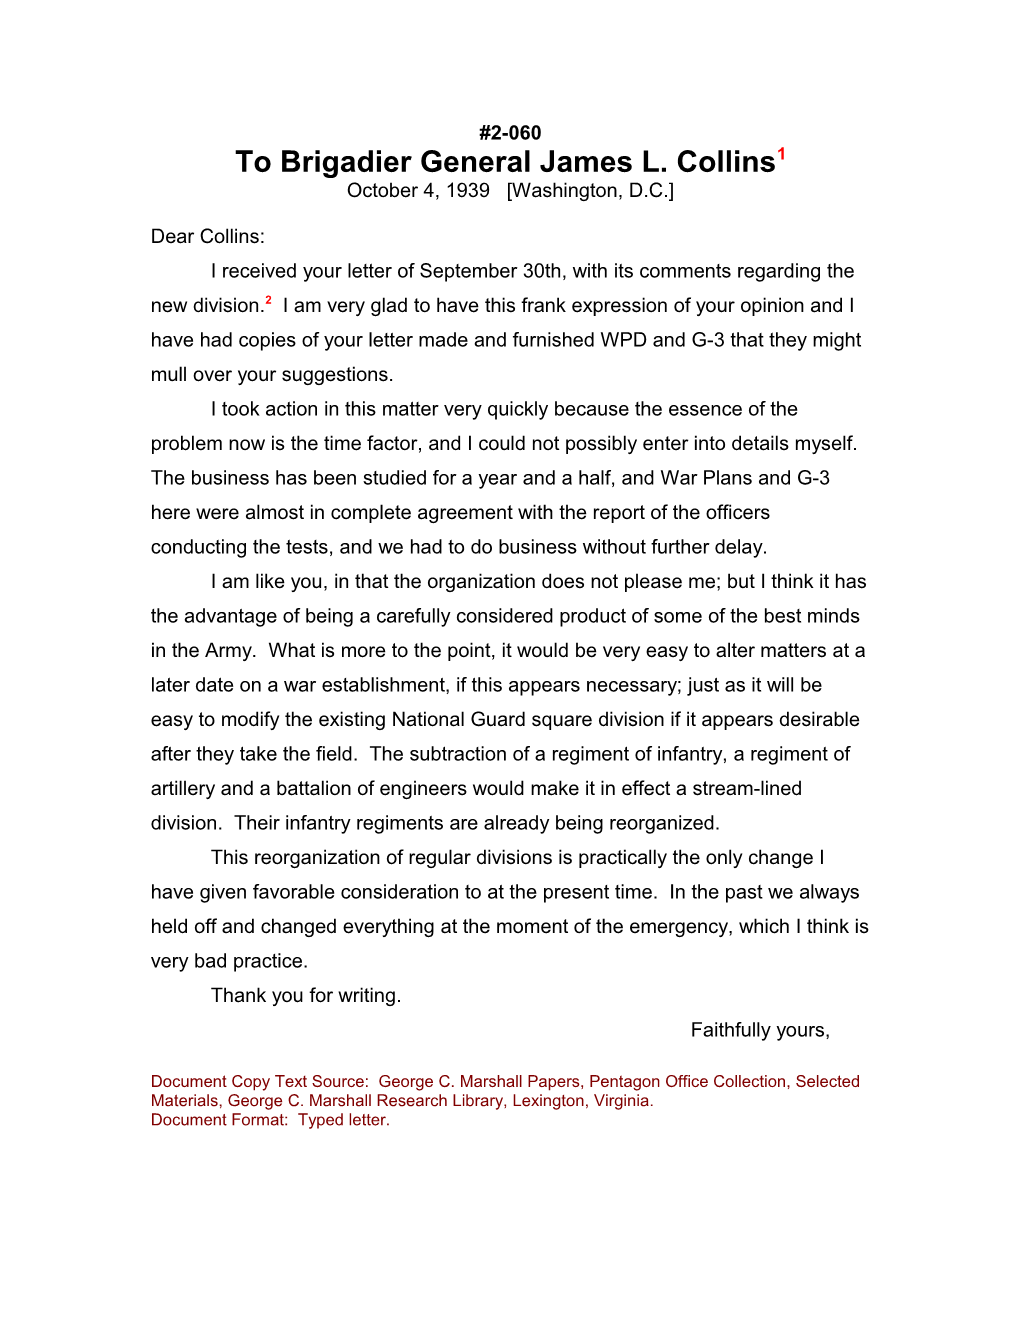 To Brigadier General James L. Collins1